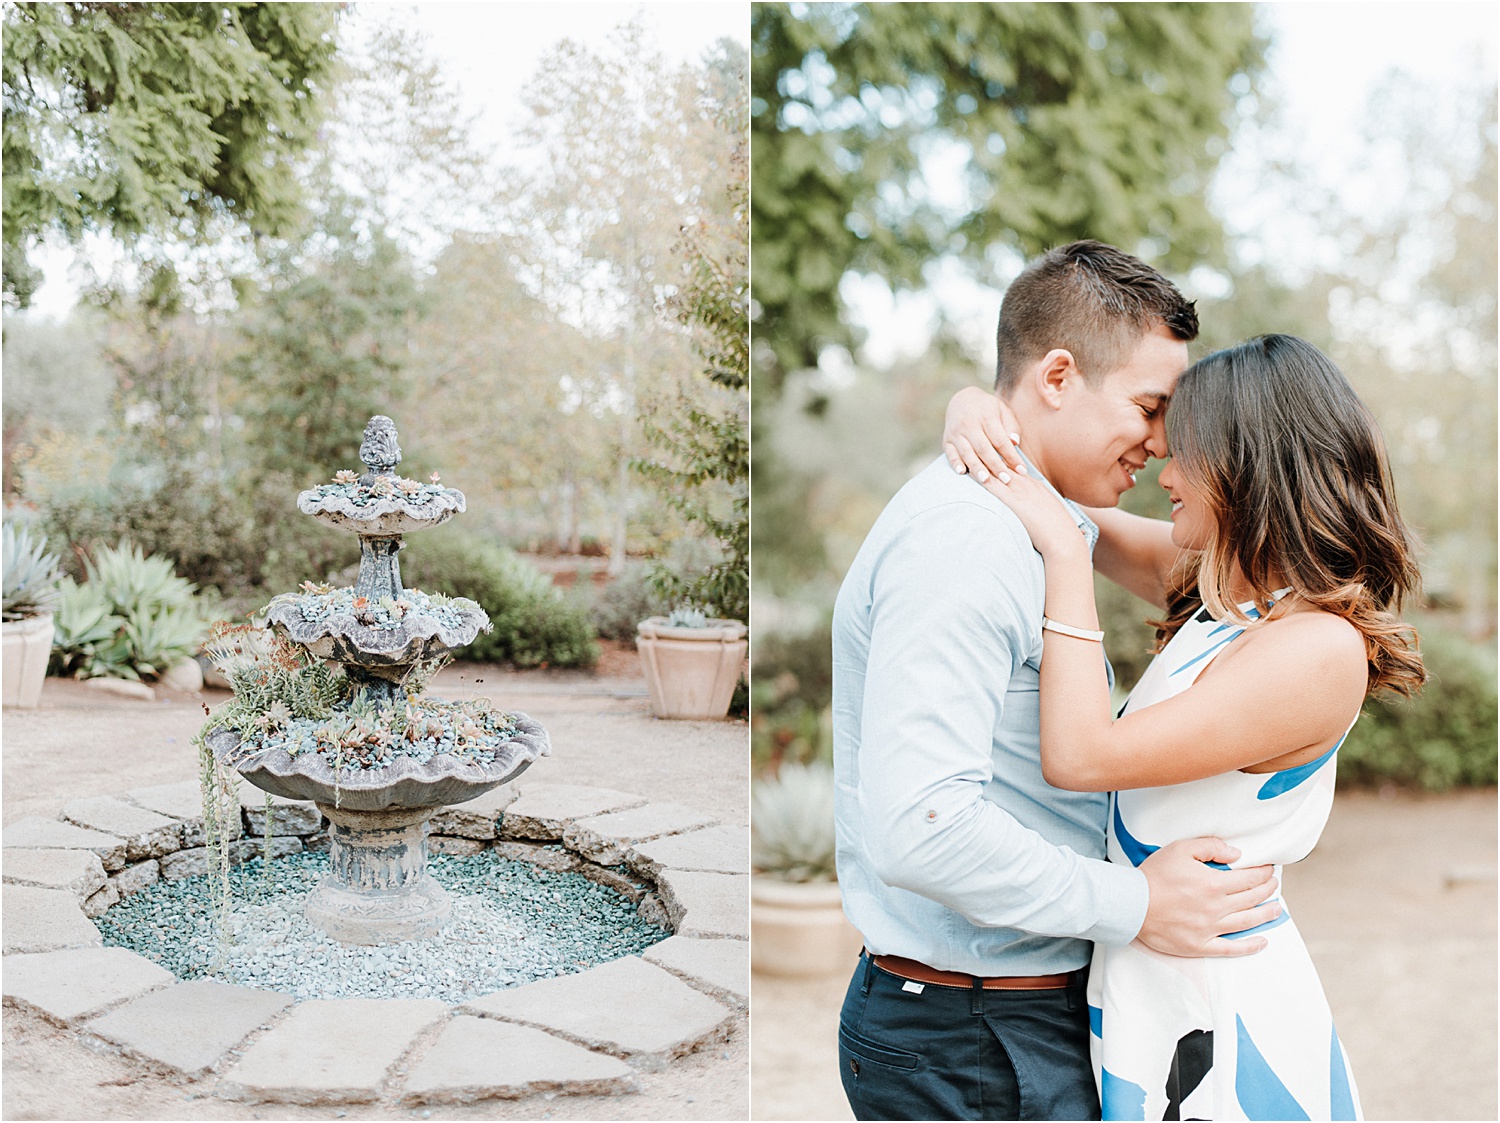 Bianca+Grant - Arlington Gardens - Pasadena - Engagement_0011.jpg